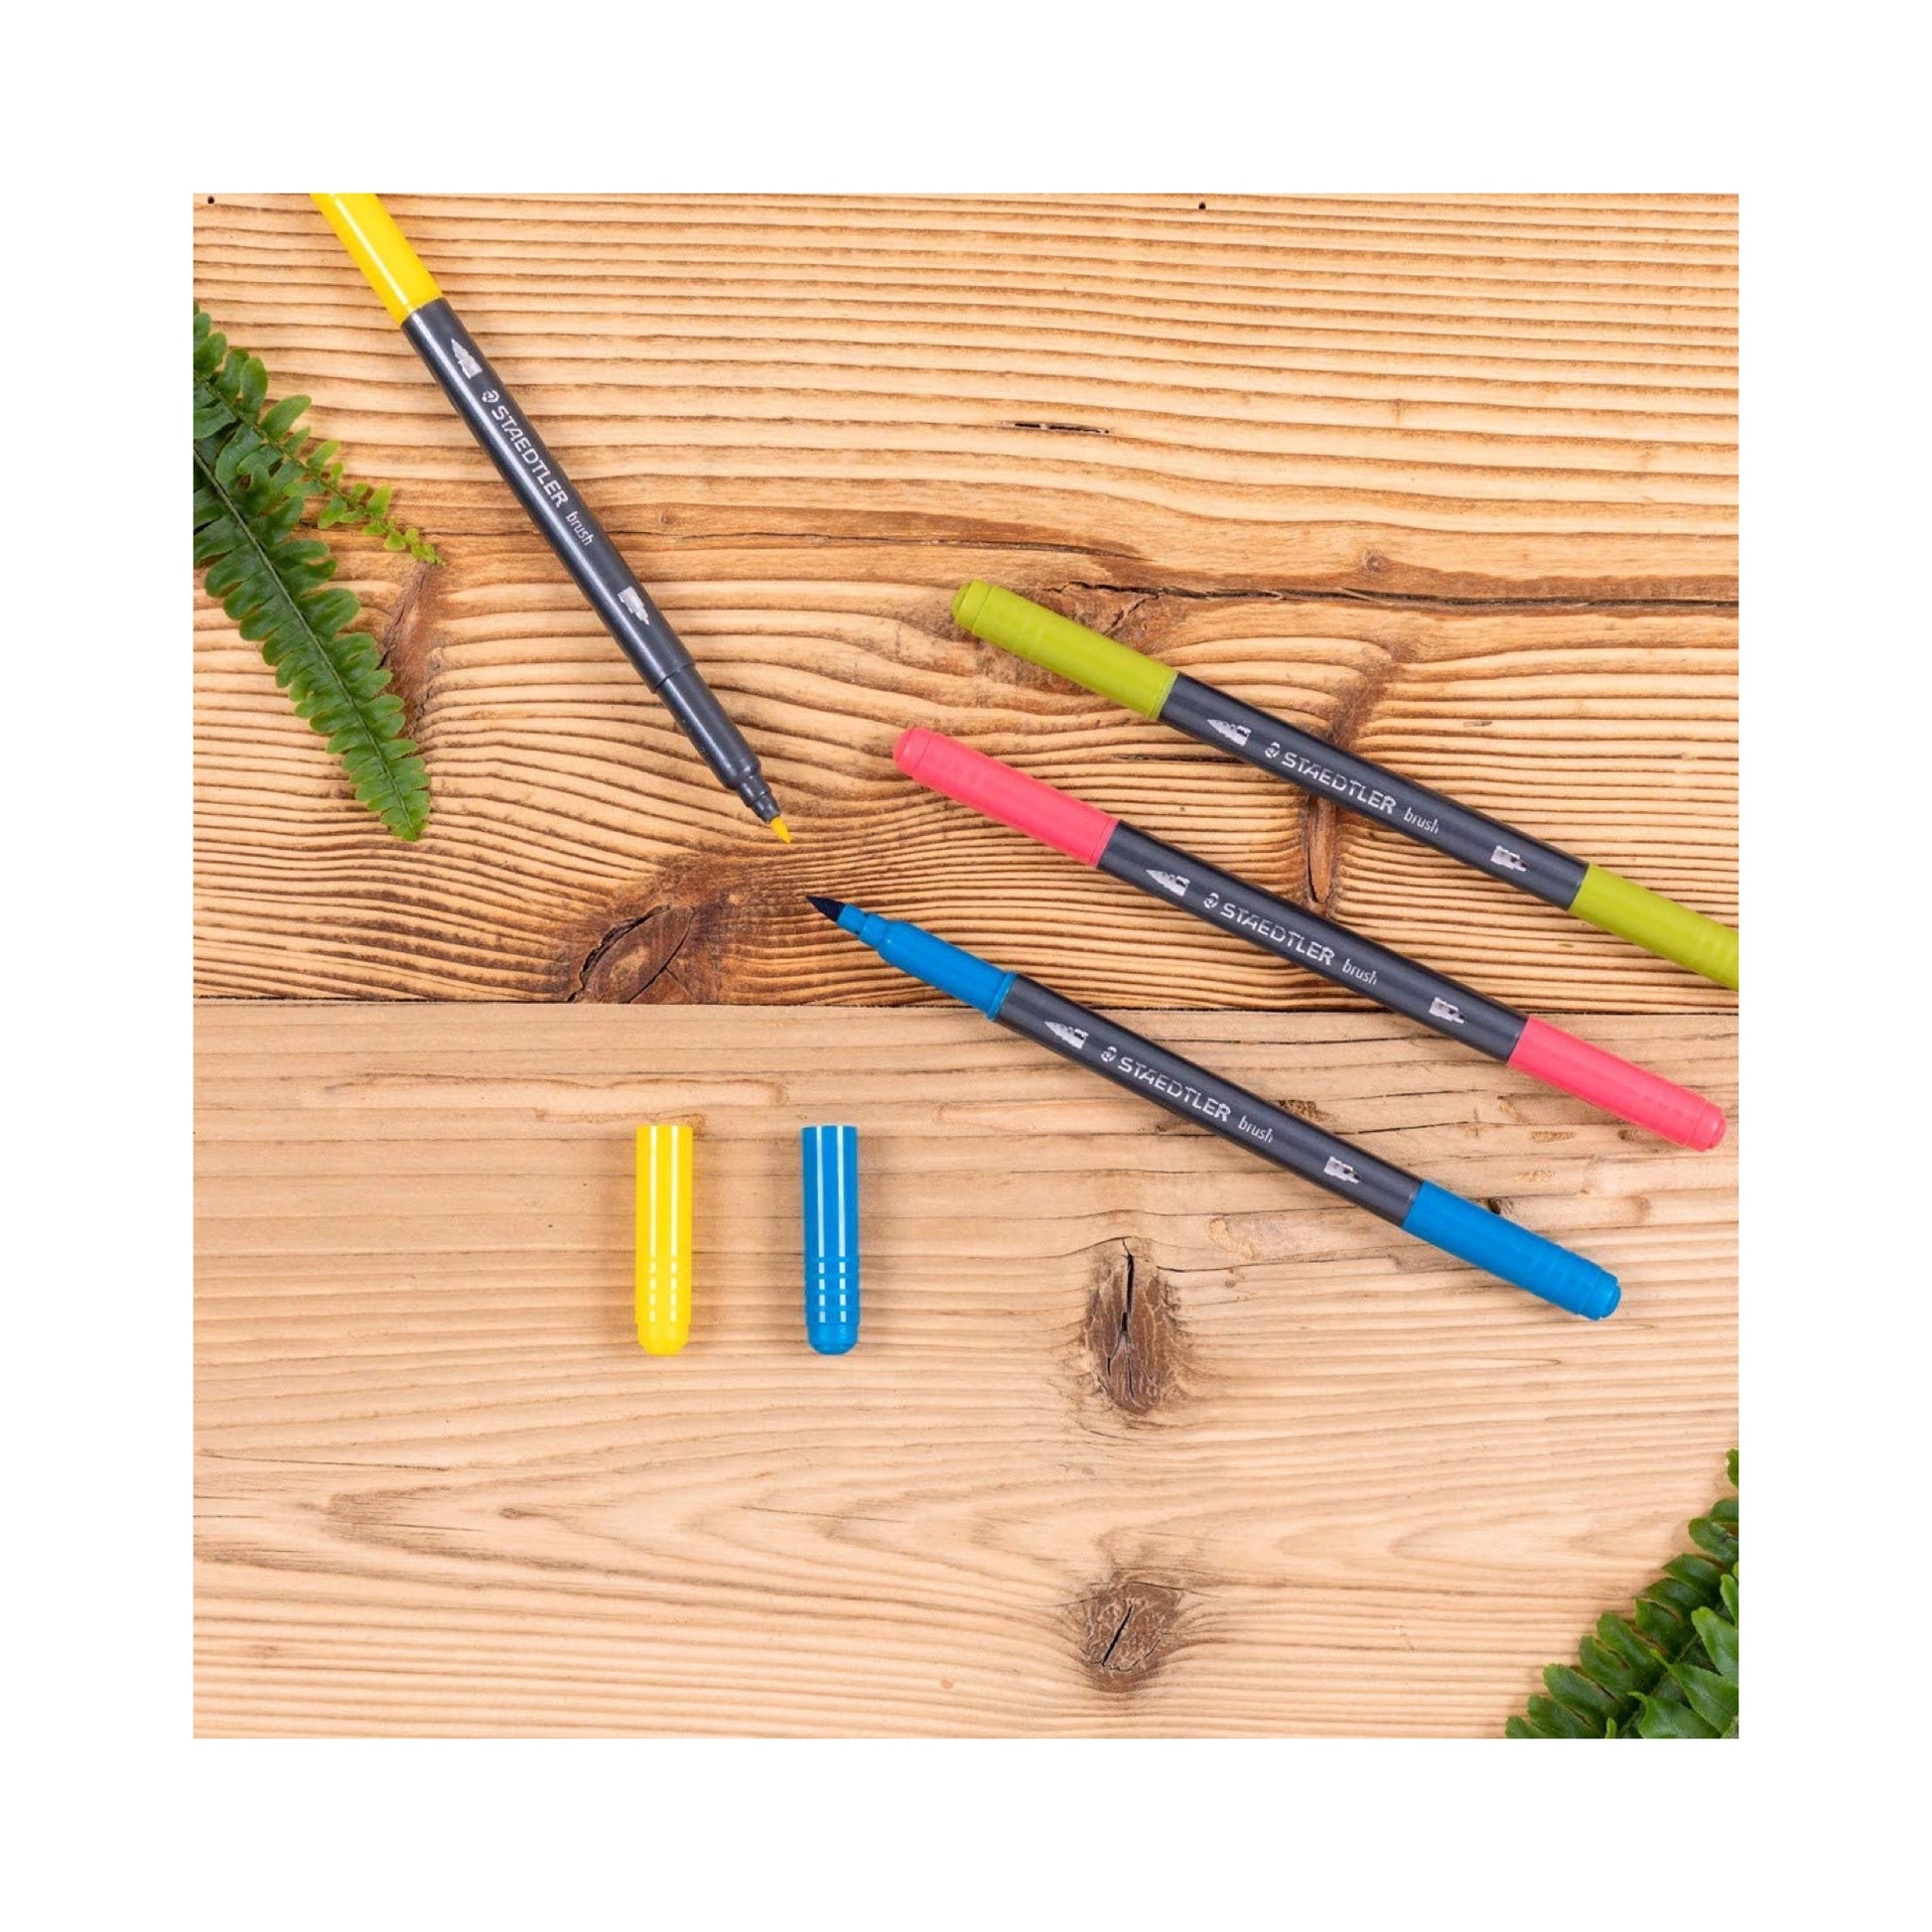 STAEDTLER Double Ended Watercolour Brush Pen 36 || الوان مائيه ستدلر ثنائية الرأس 36 لون